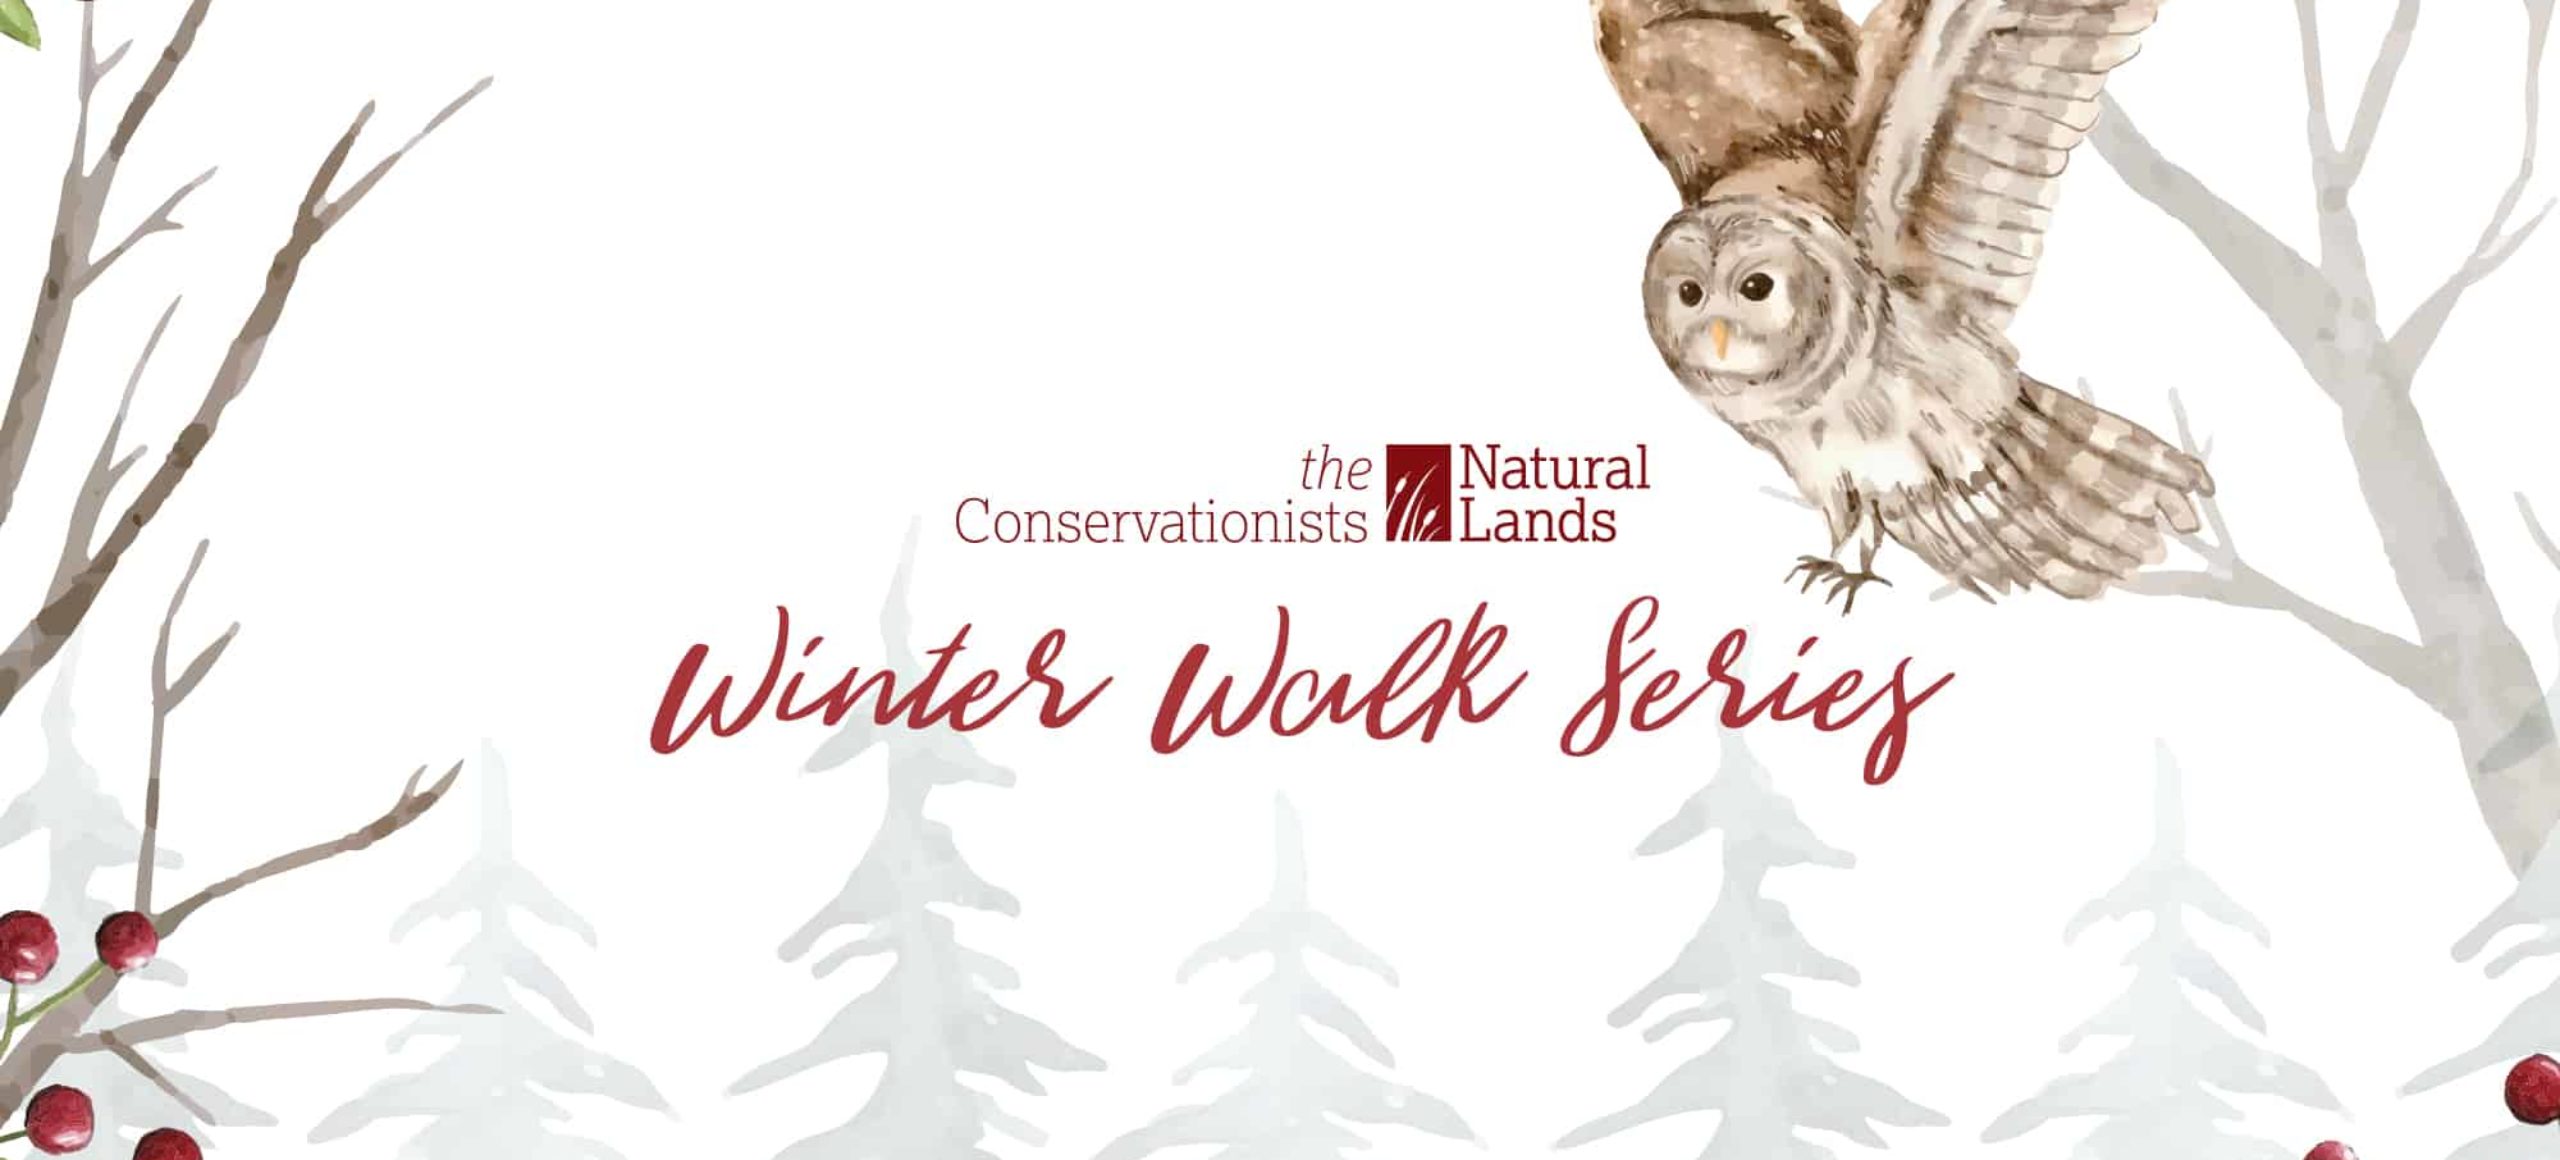 graphic barn owl banner for winter walk series